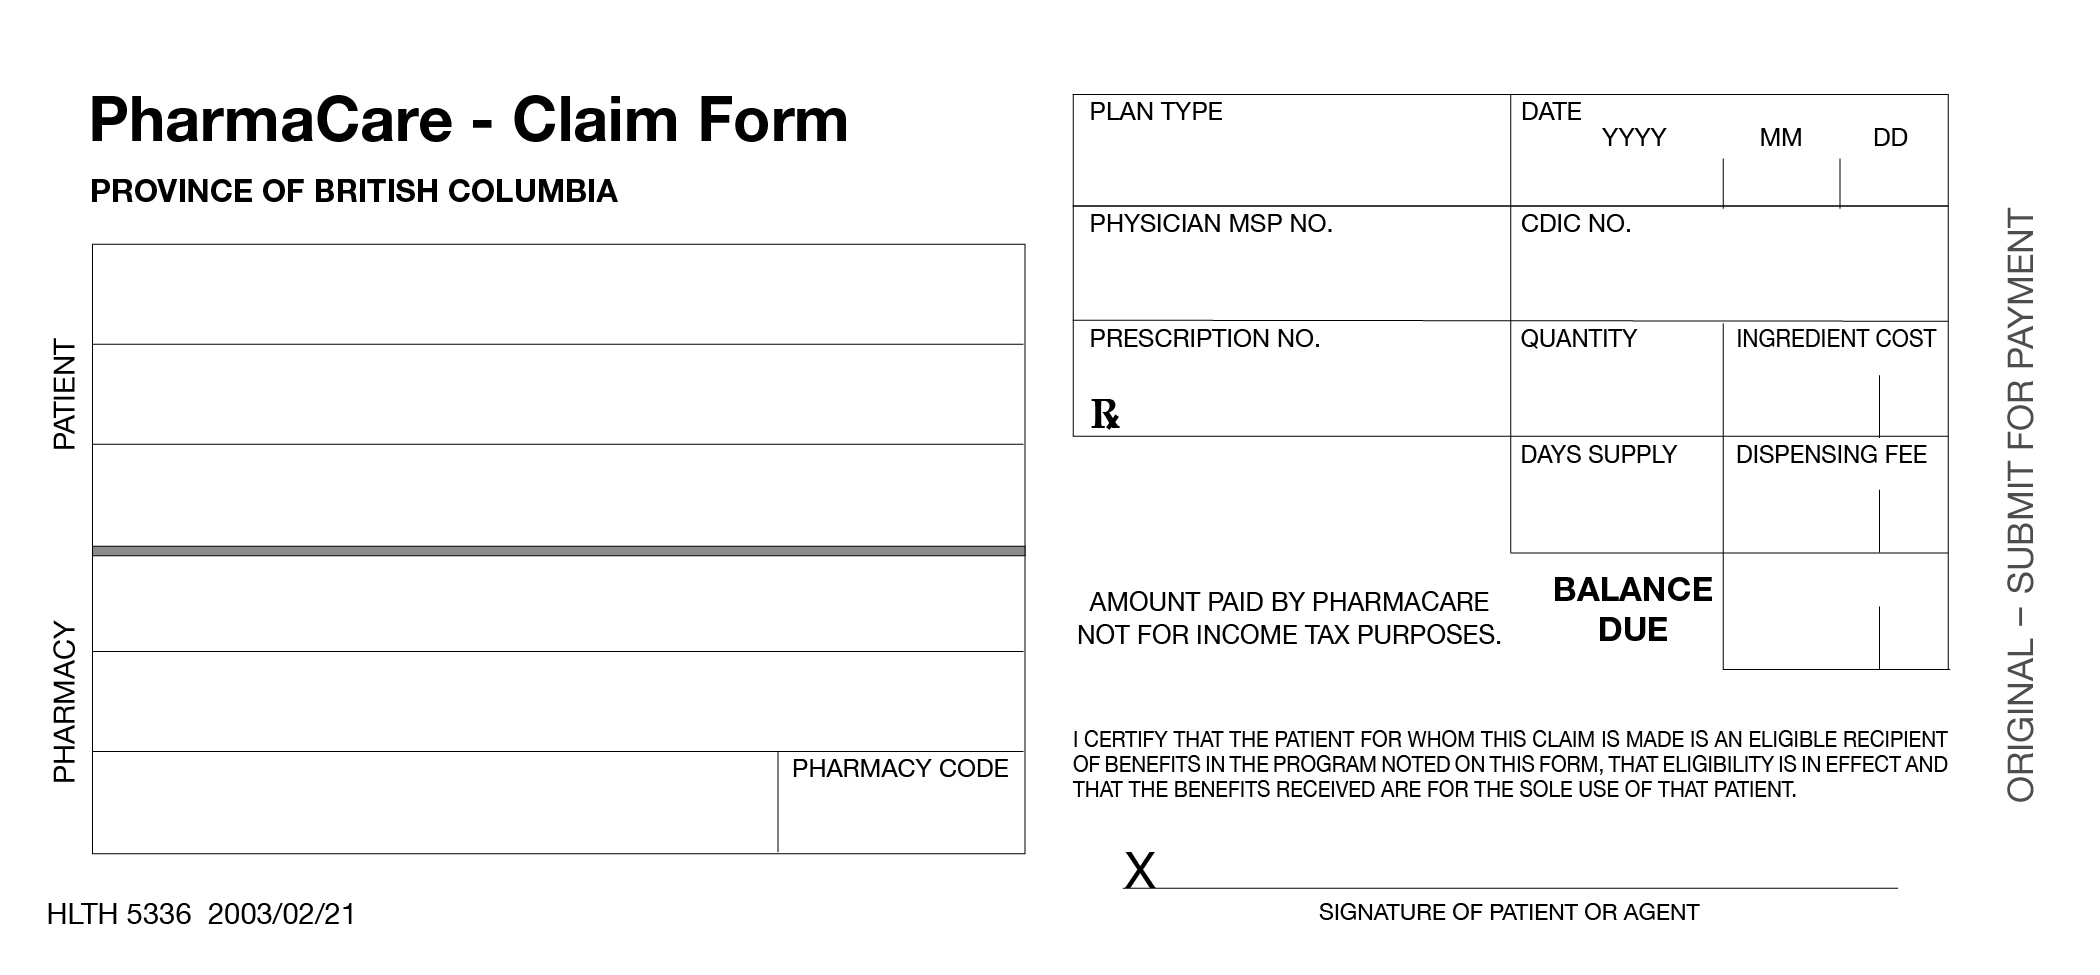 PharmaCare Claim Form (HLTH 5336)